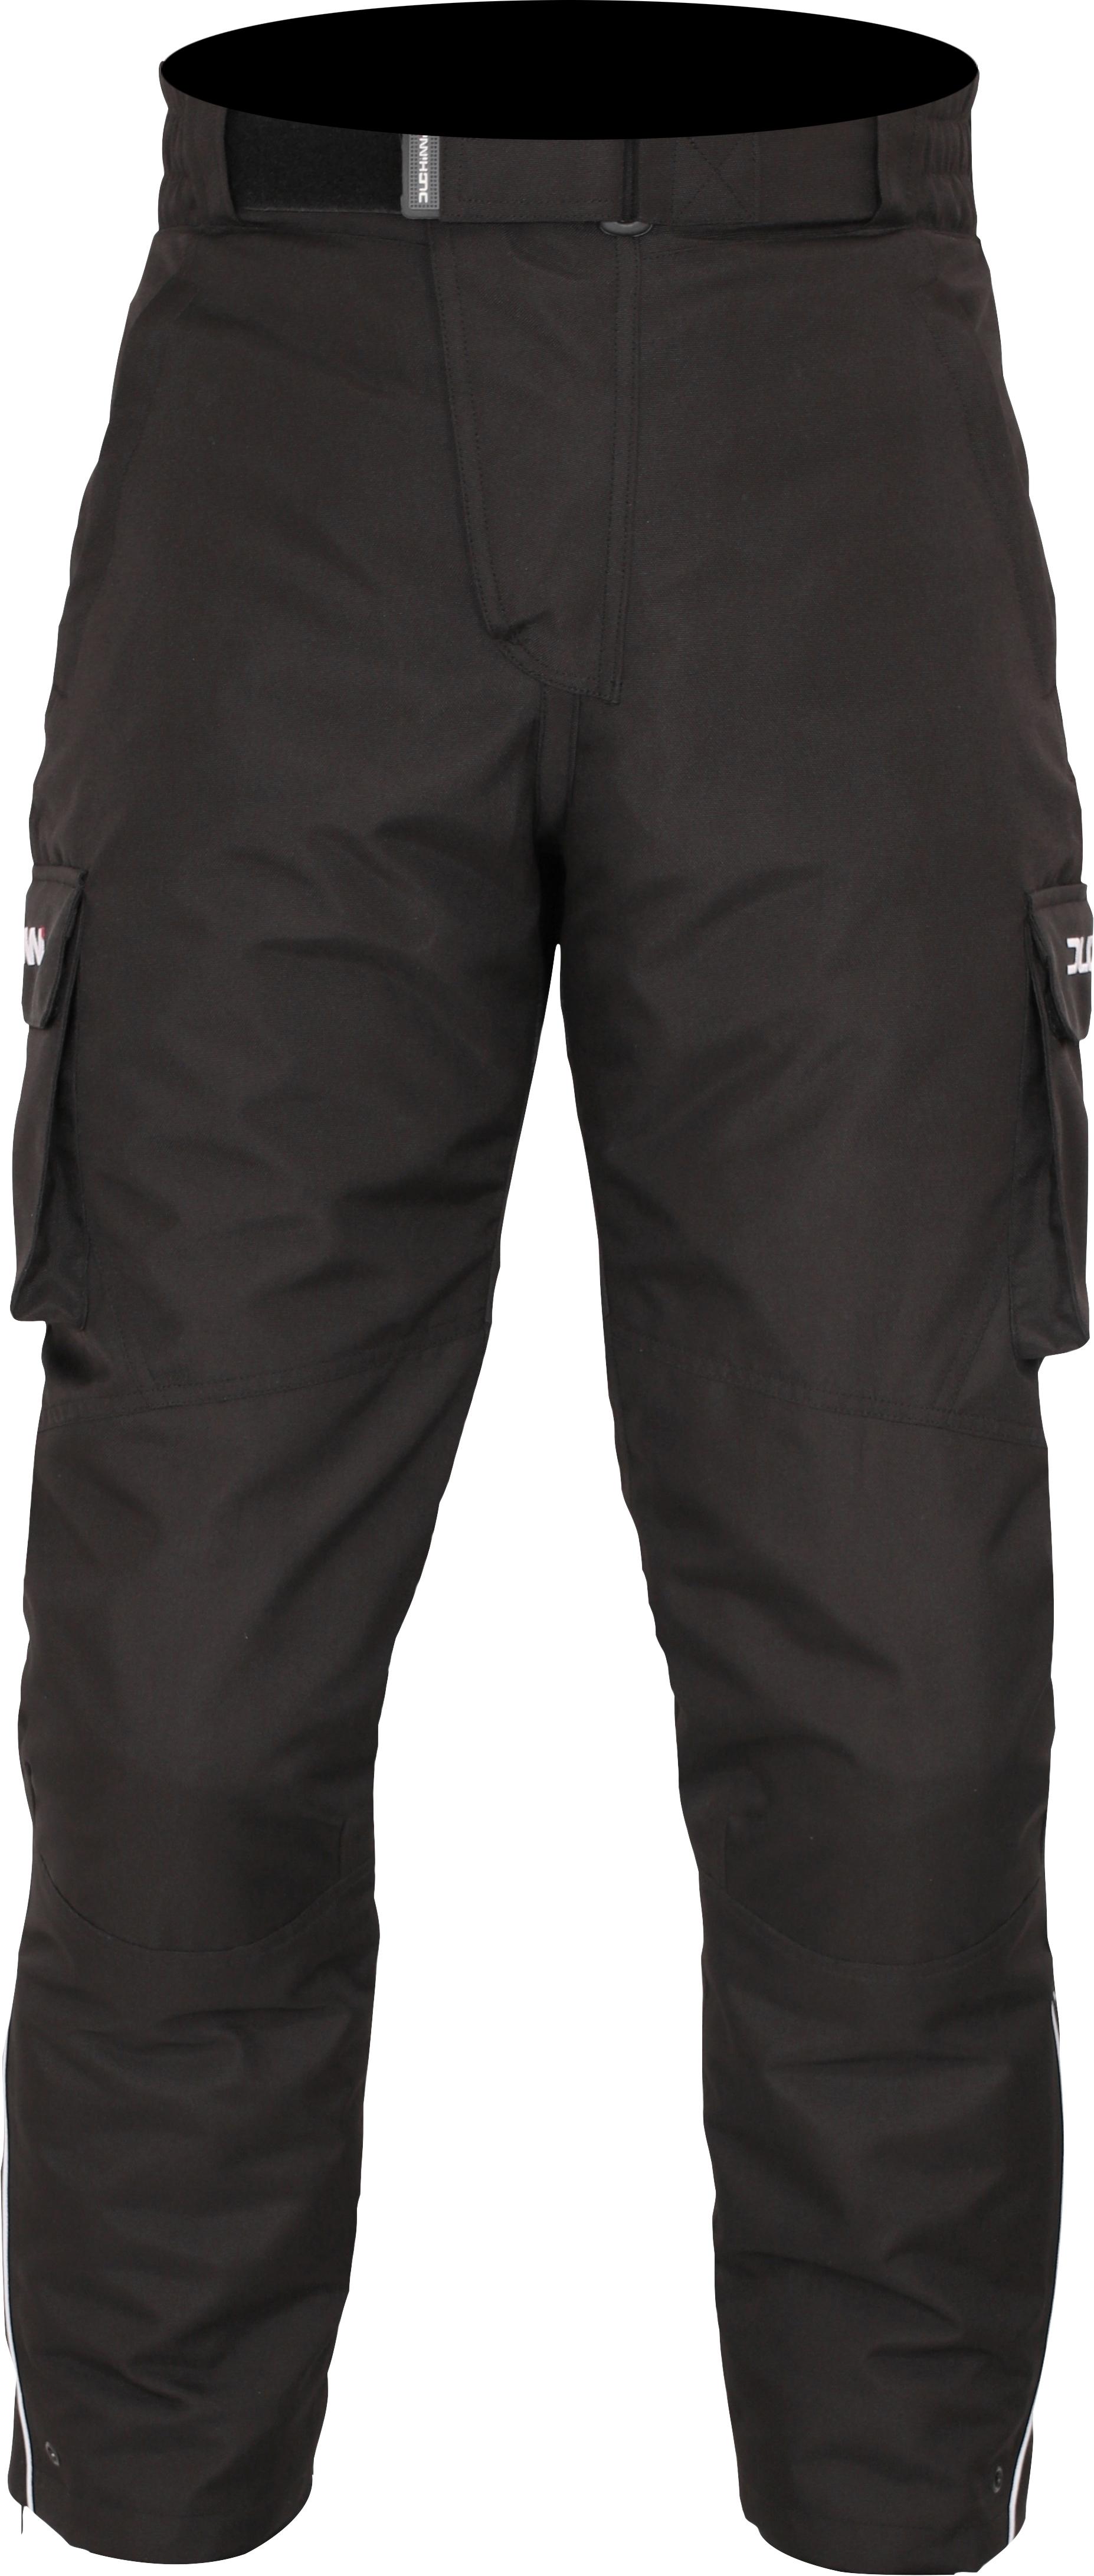 Duchinni Pacific Motorcycle Short Jeans - Black, Xl